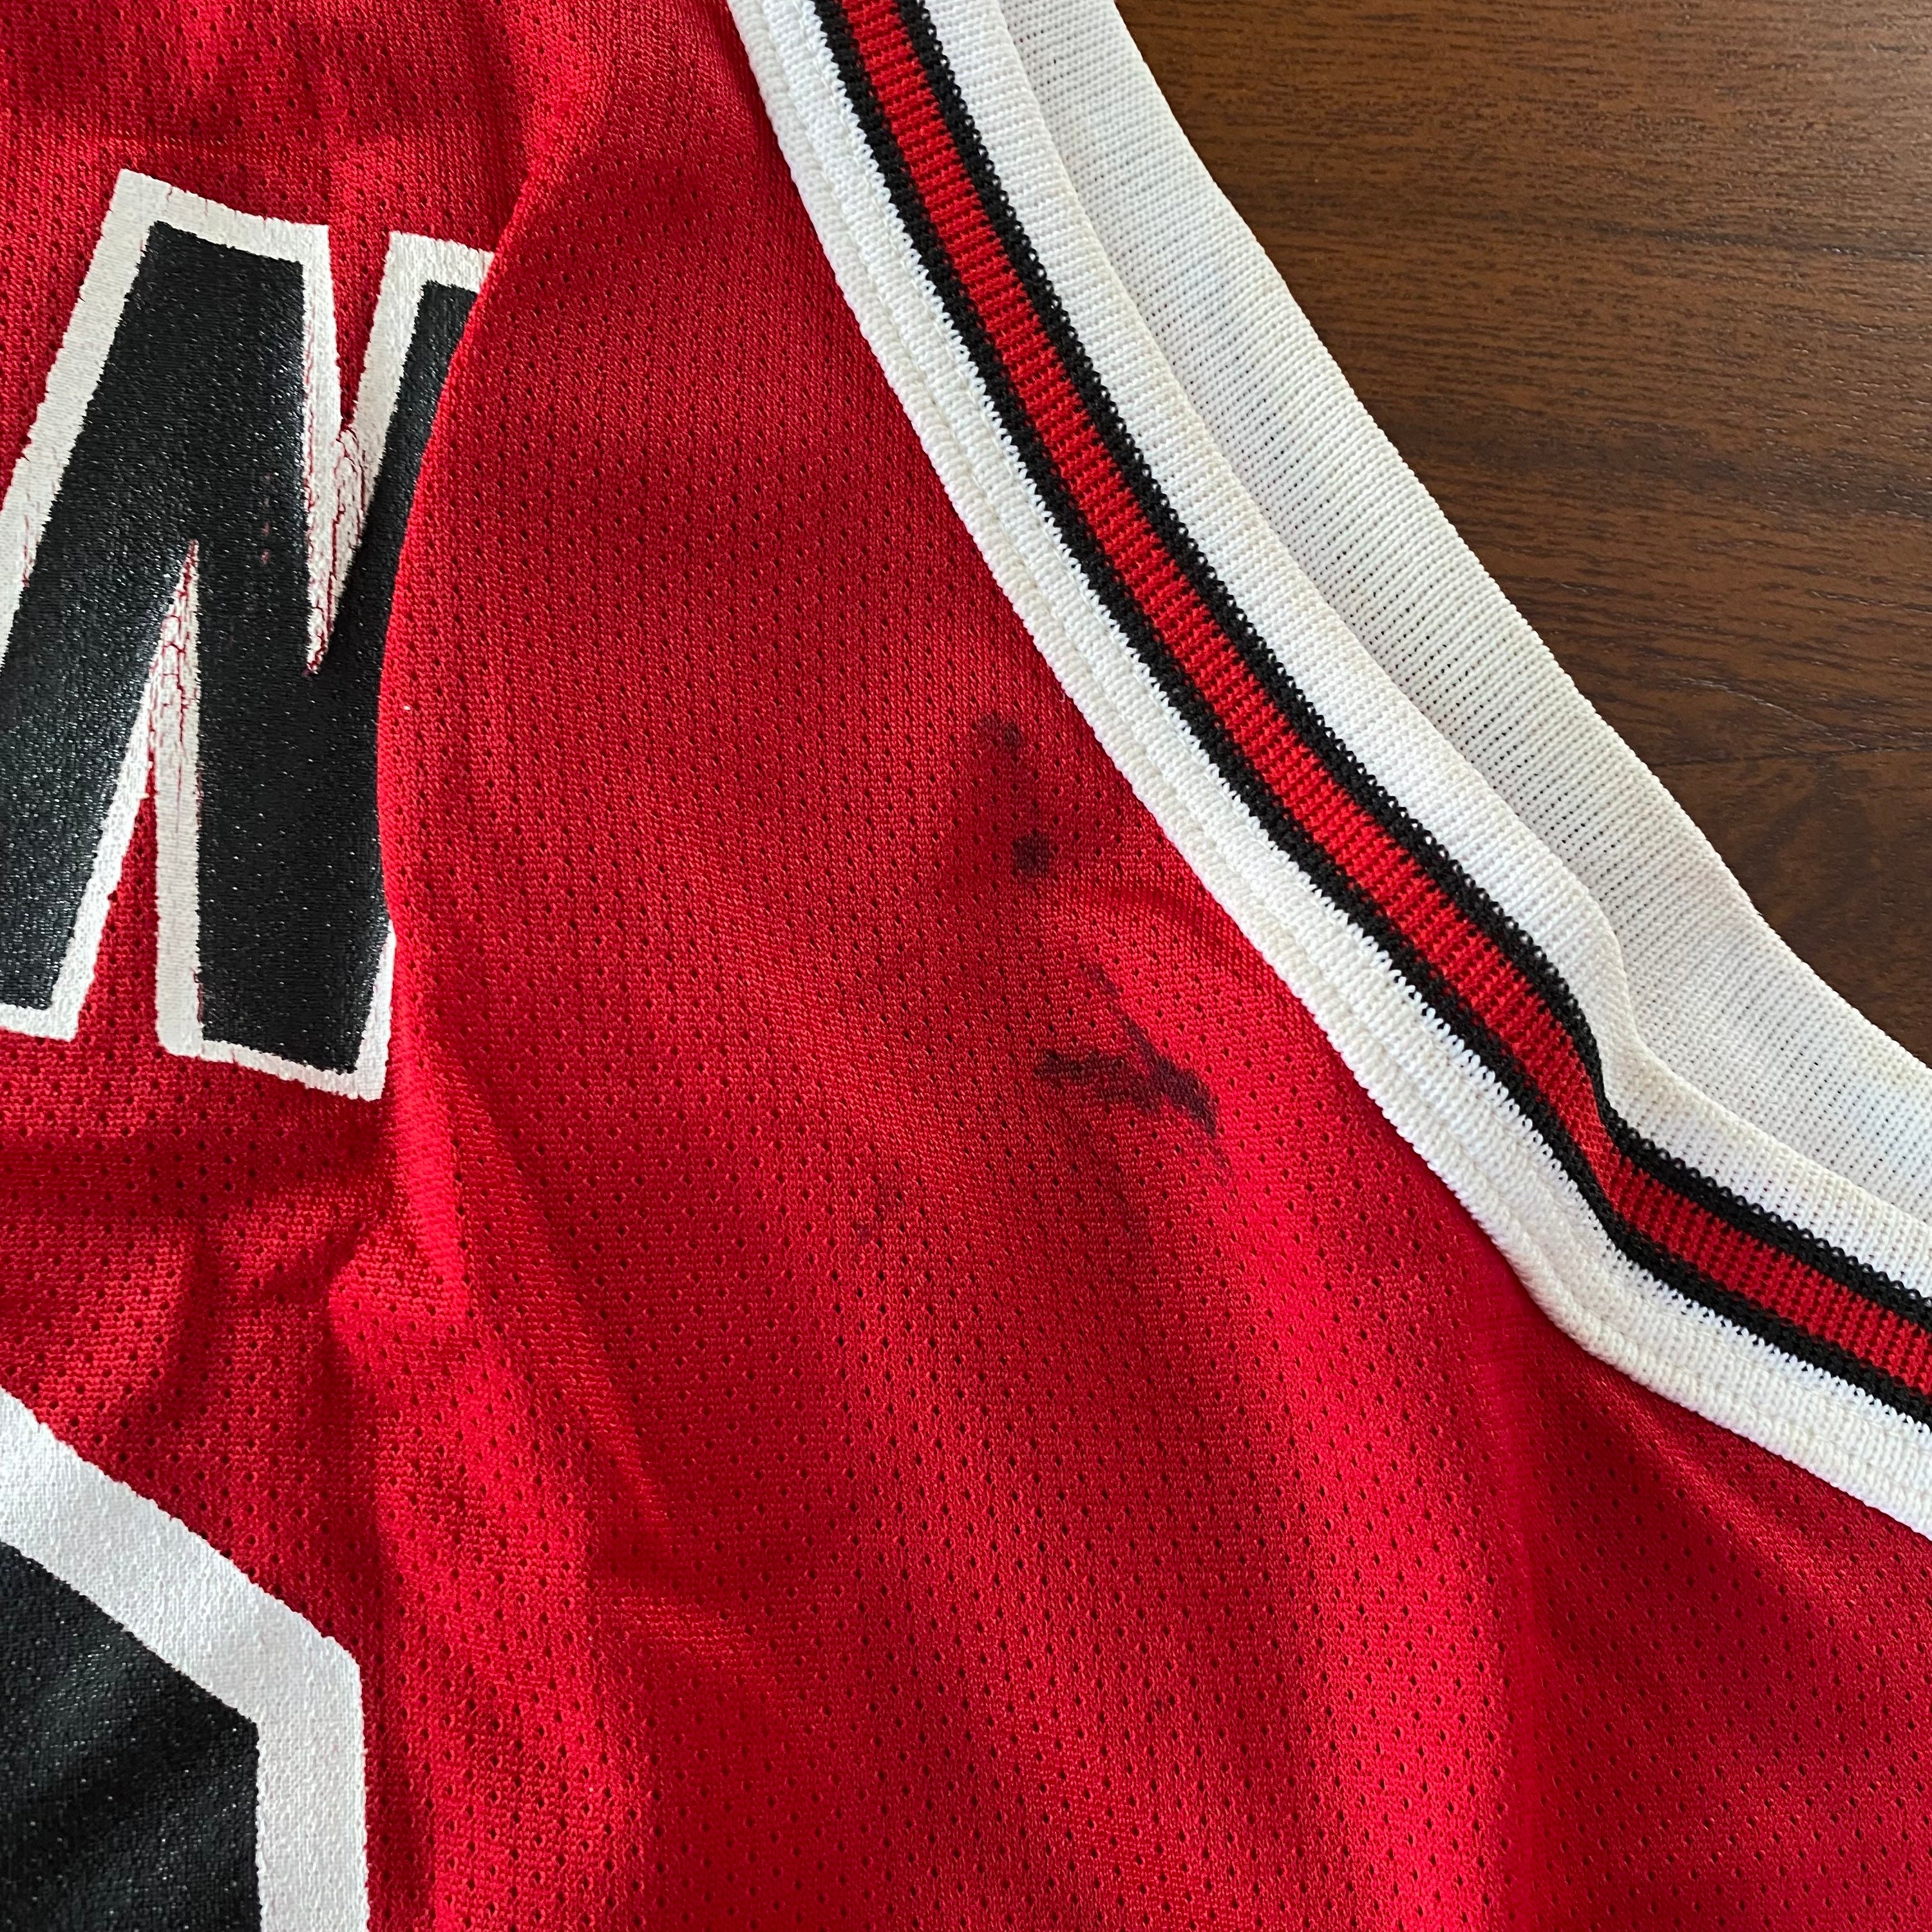 Chicago Bulls Michael Jordan 23 Finals Home Jersey – NewJerseysPlug